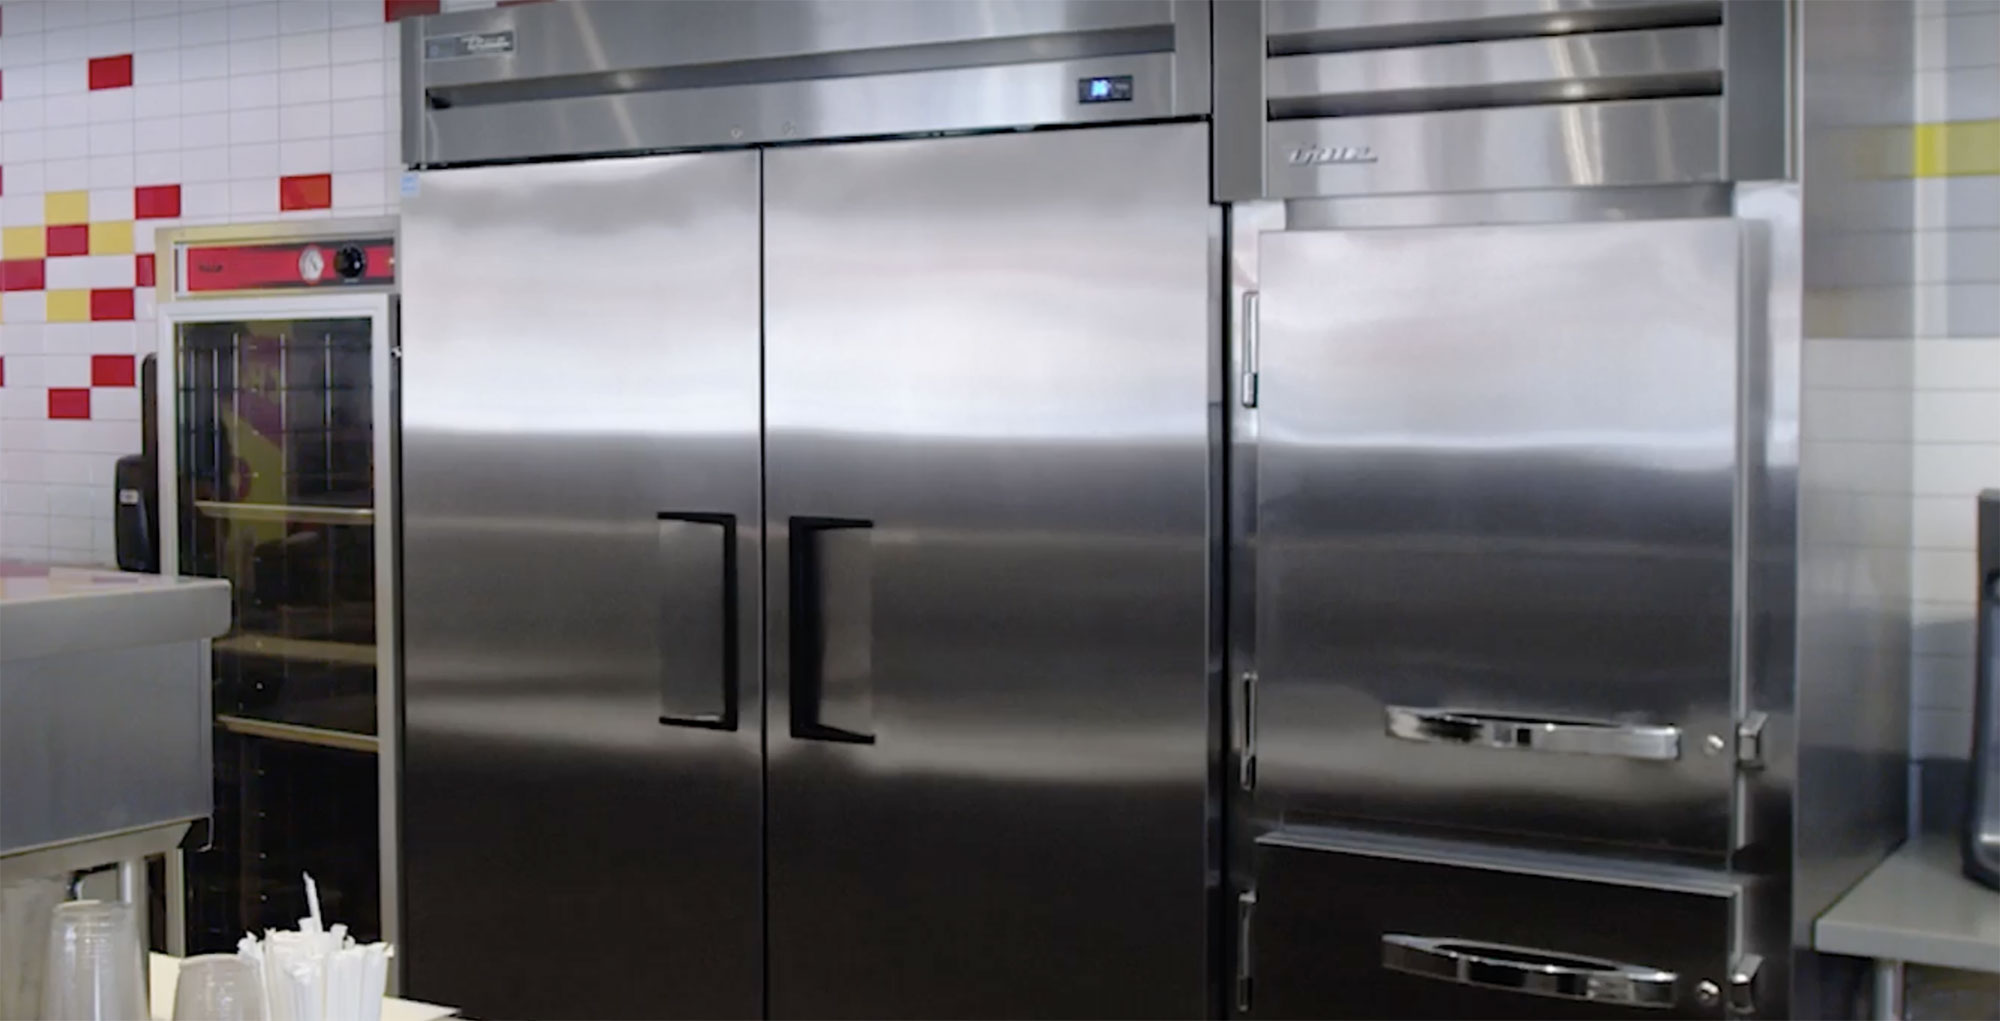 Commercial Refrigerators, Commercial Freezers